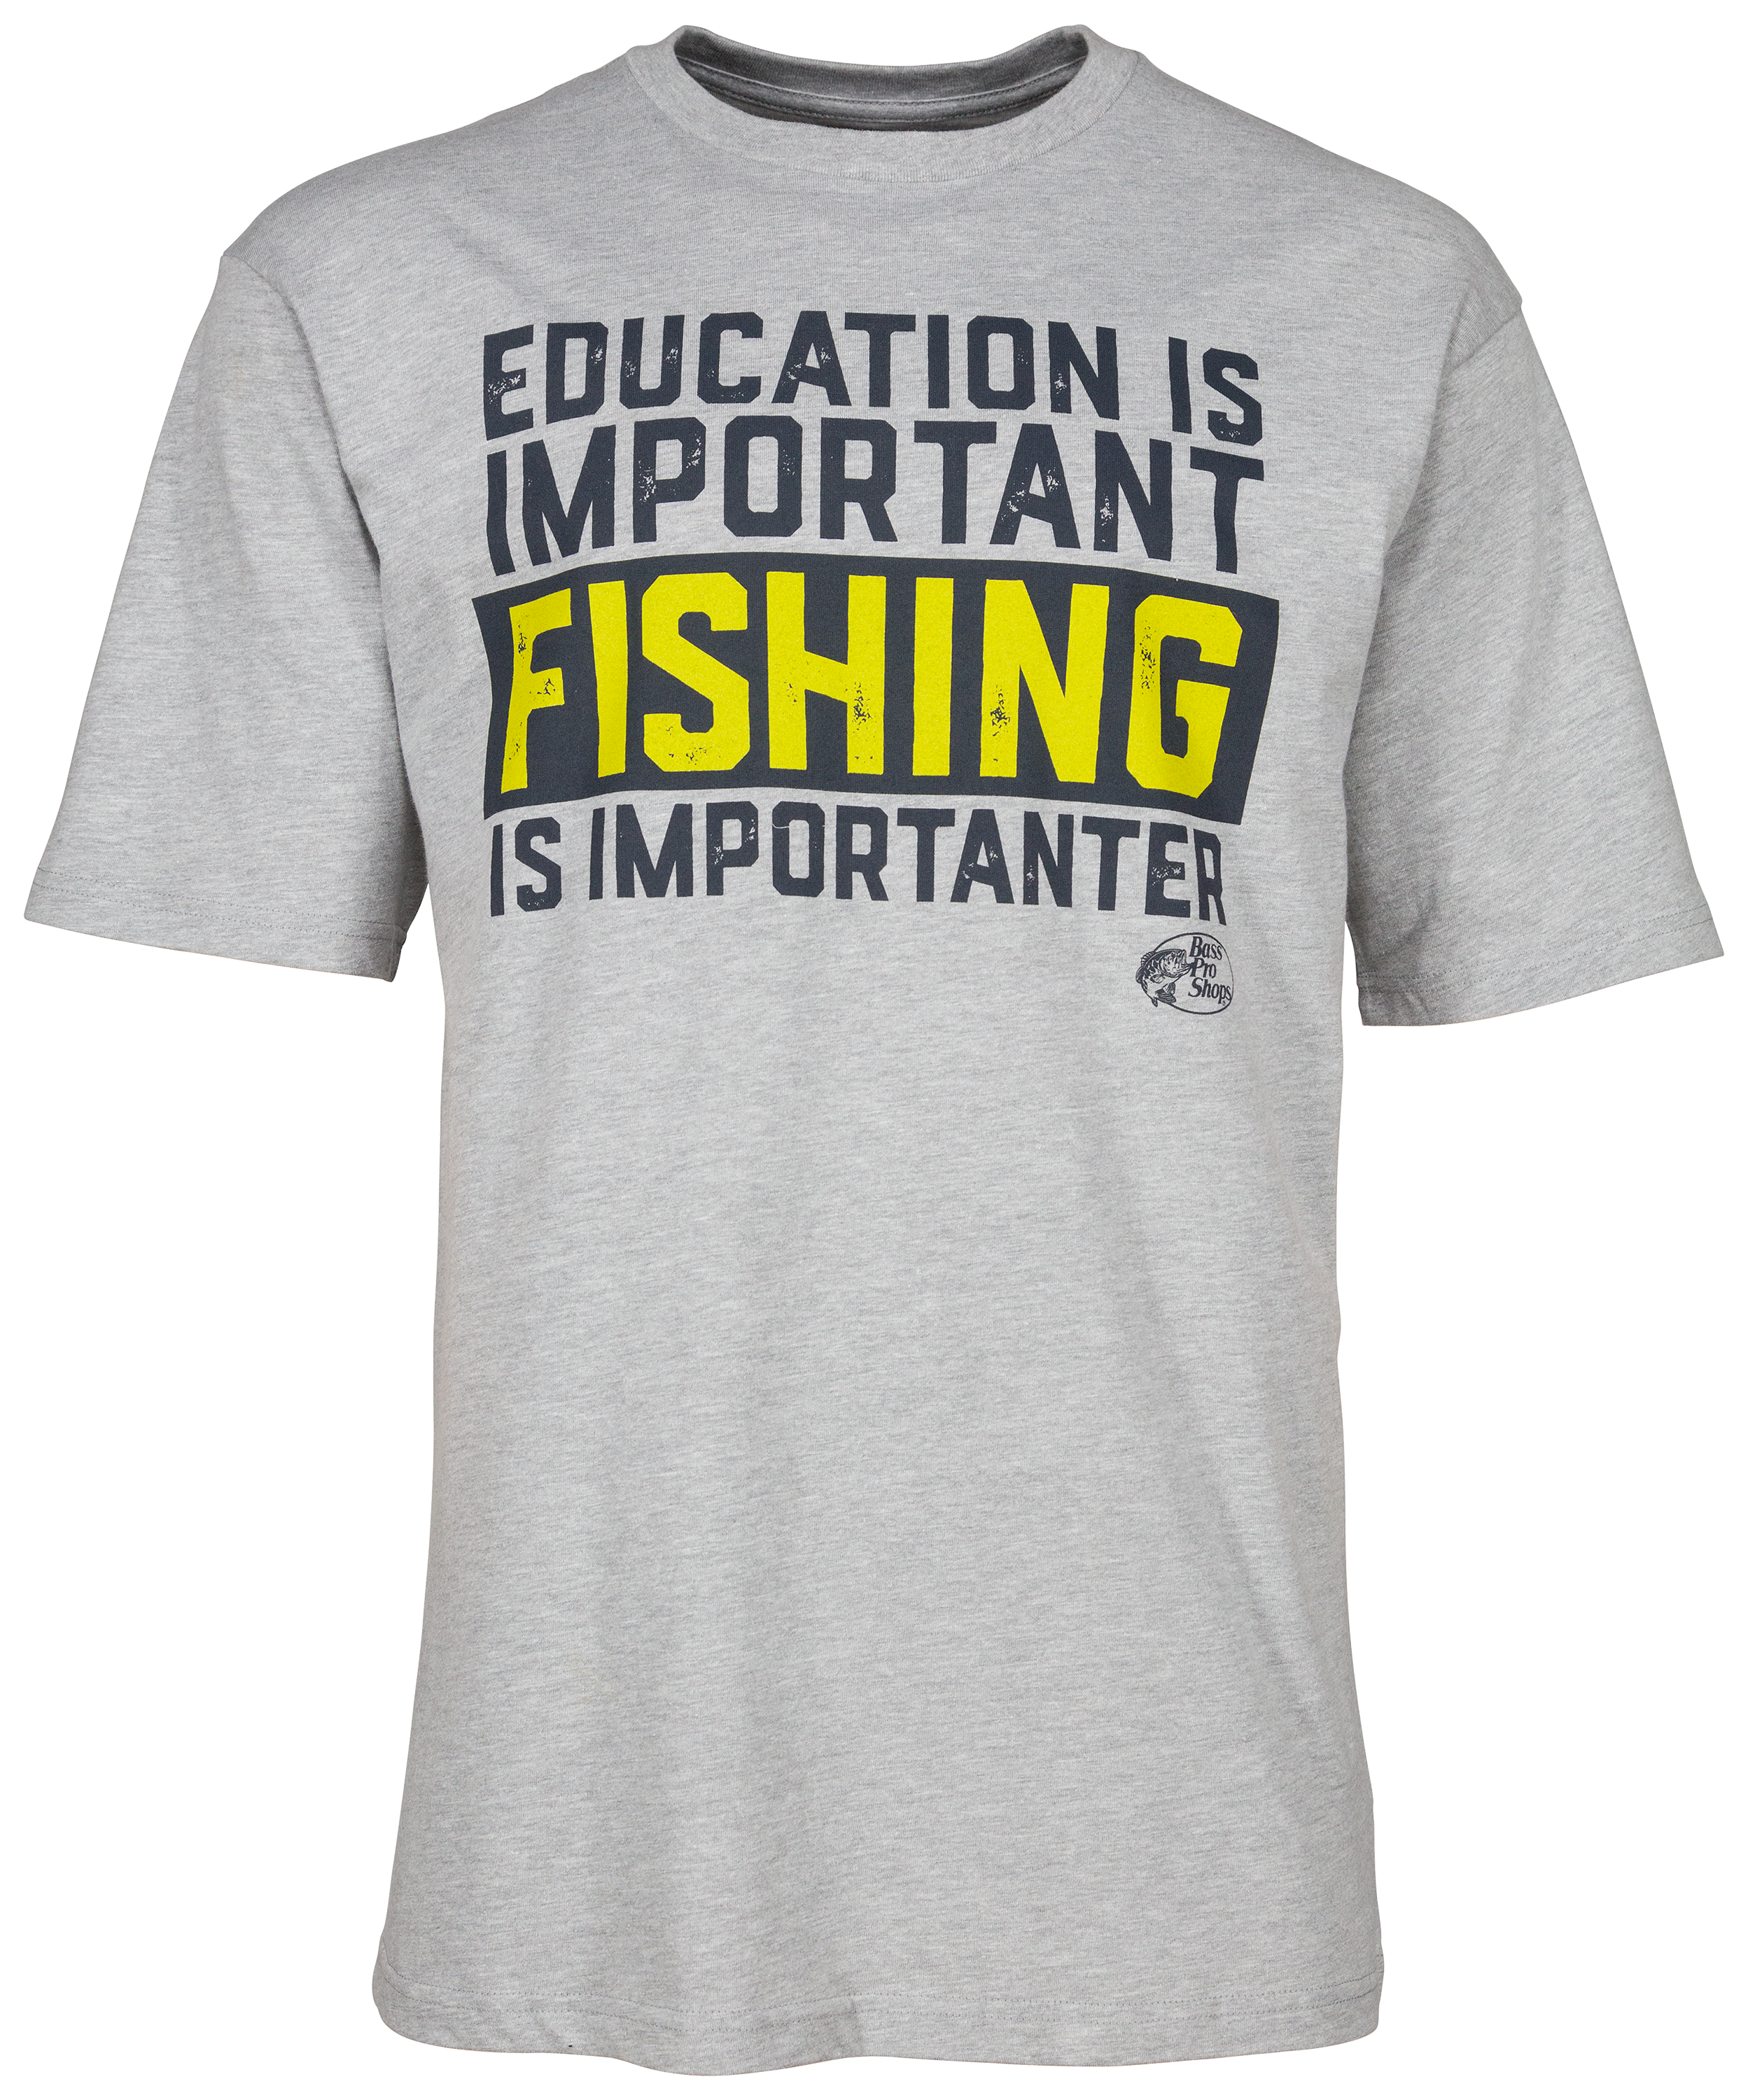 Bass Pro Shops Fishing Education Short-Sleeve T-Shirt for Men